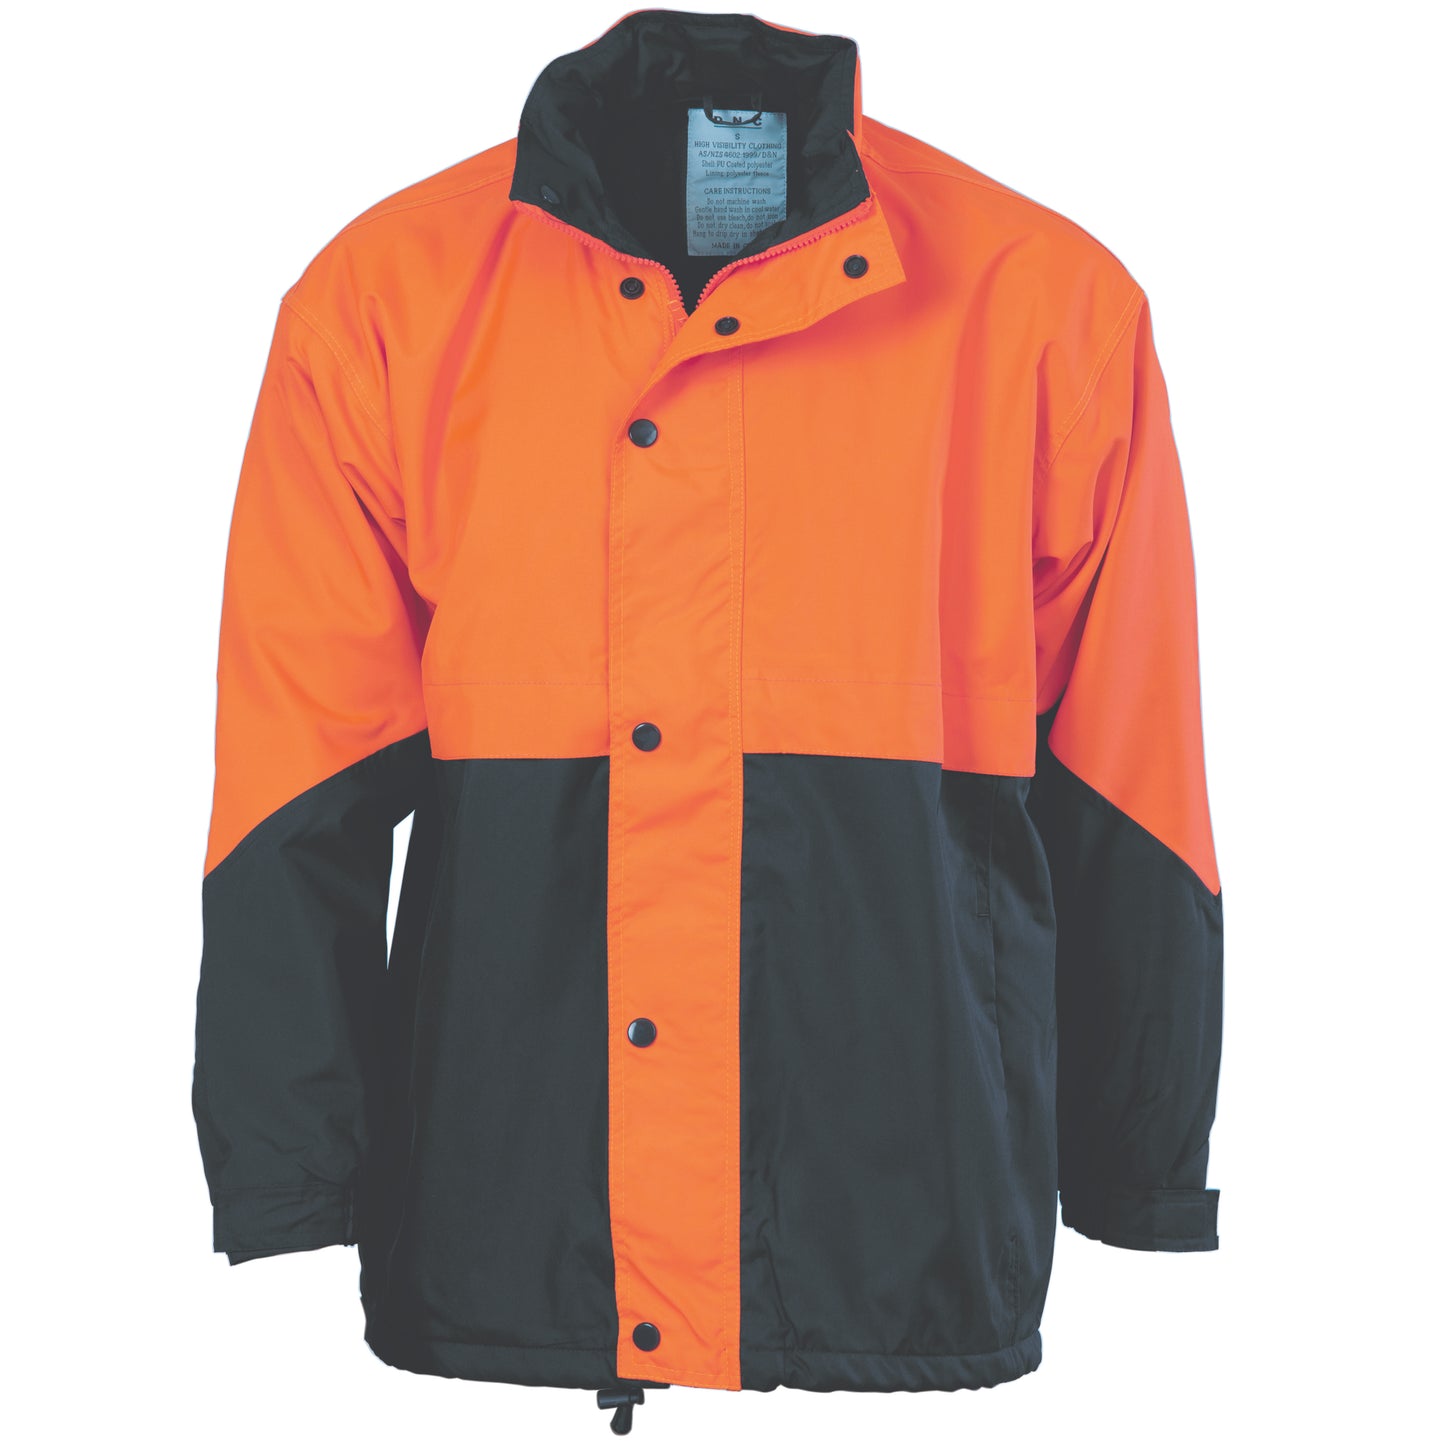 DNC HiVis Two Tone Classic Jacket Product Code: 3866 - Star Uniforms Australia